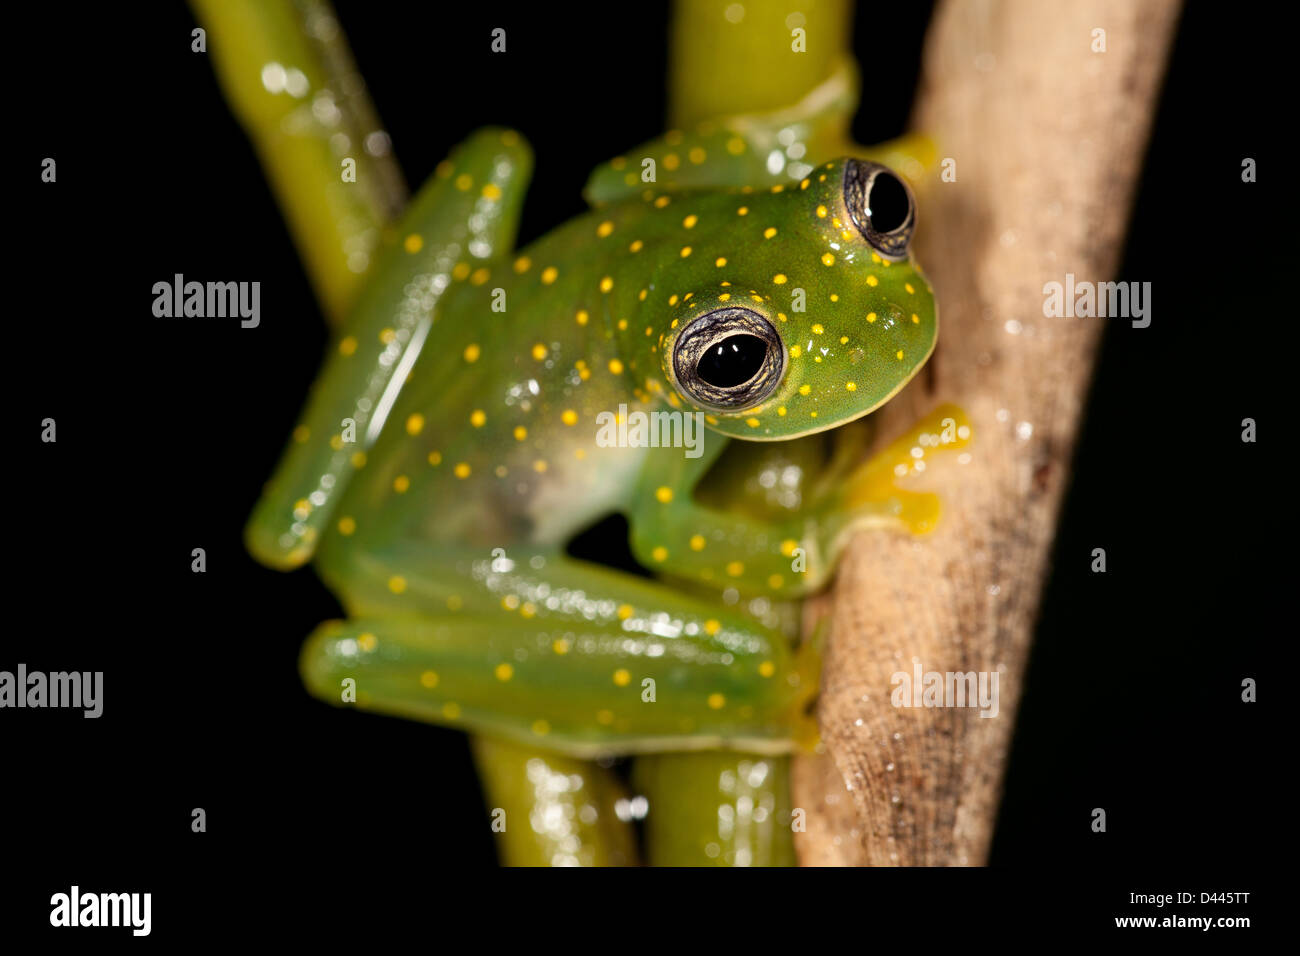 White-spotted Glass Frog, Cochranella albomaculata, in Burbayar nature reserve, Panama province, Republic of Panama. Stock Photo